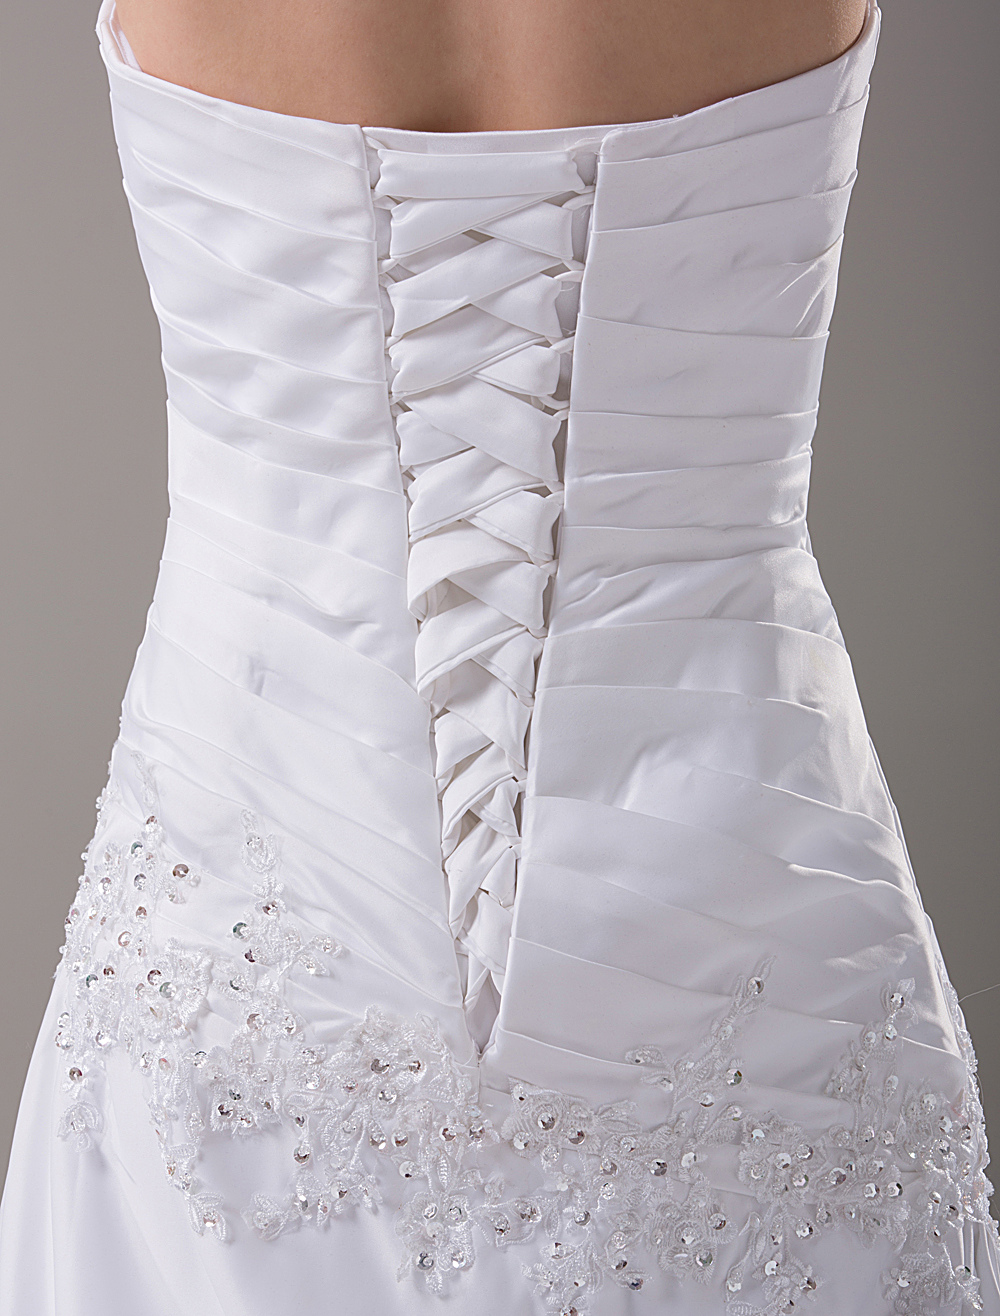 Sheath Strapless Beaded Embroidery Satin Wedding Dress - Milanoo.com